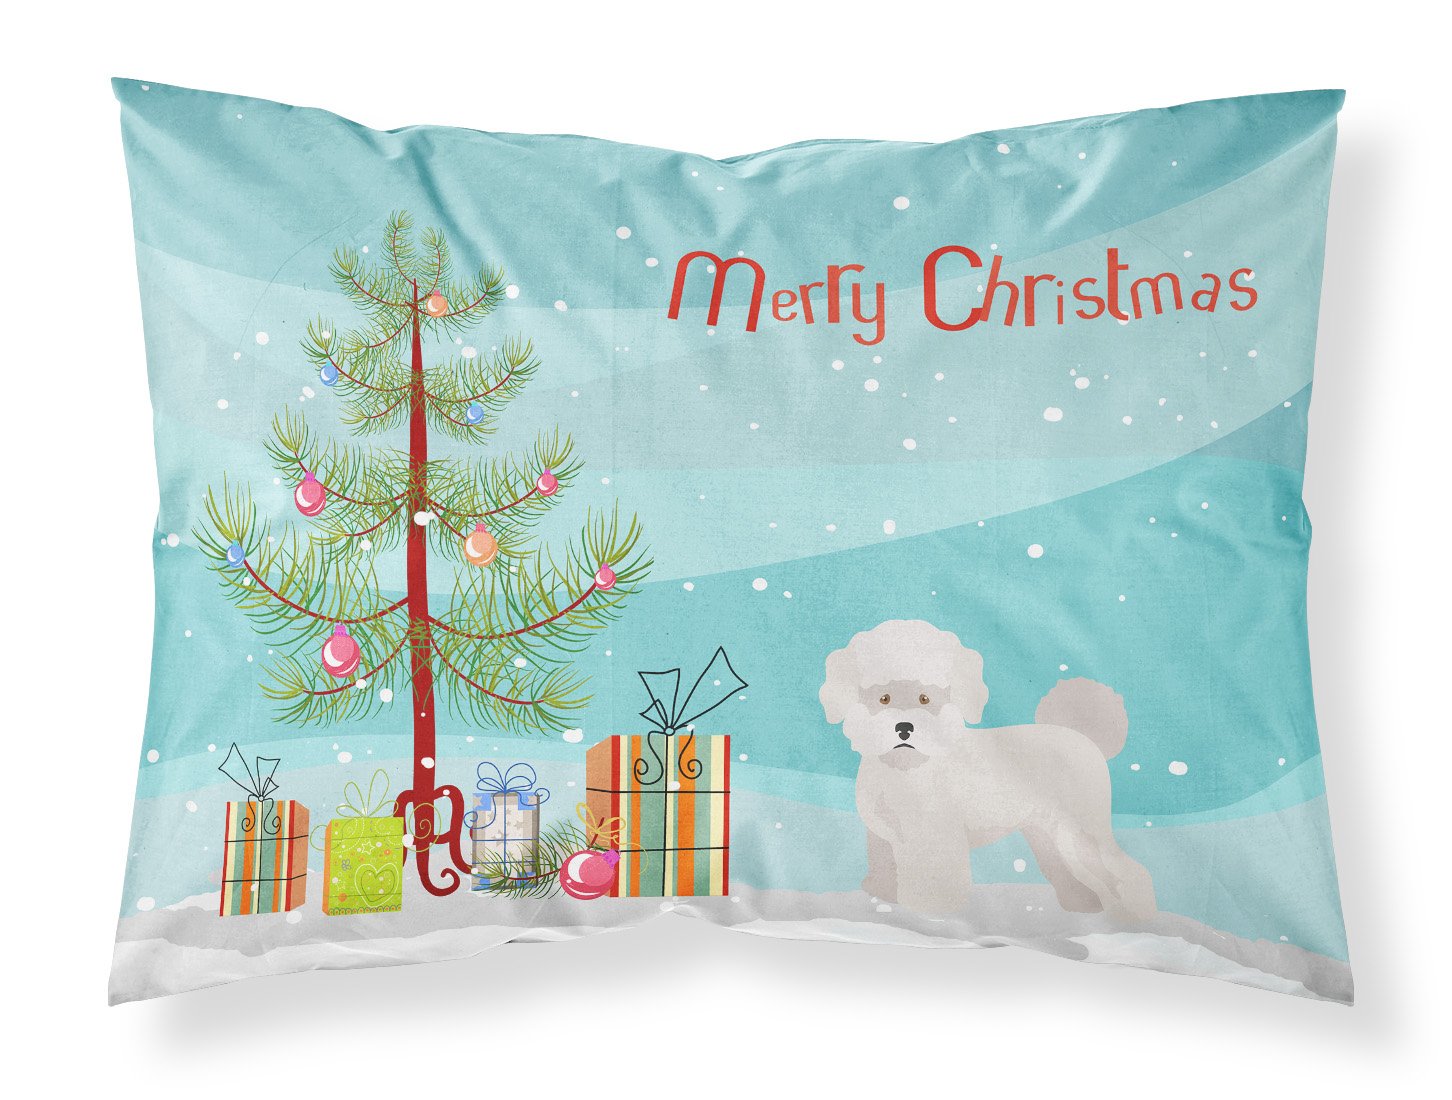 Bichon Frisé Christmas Tree Fabric Standard Pillowcase CK3445PILLOWCASE by Caroline's Treasures